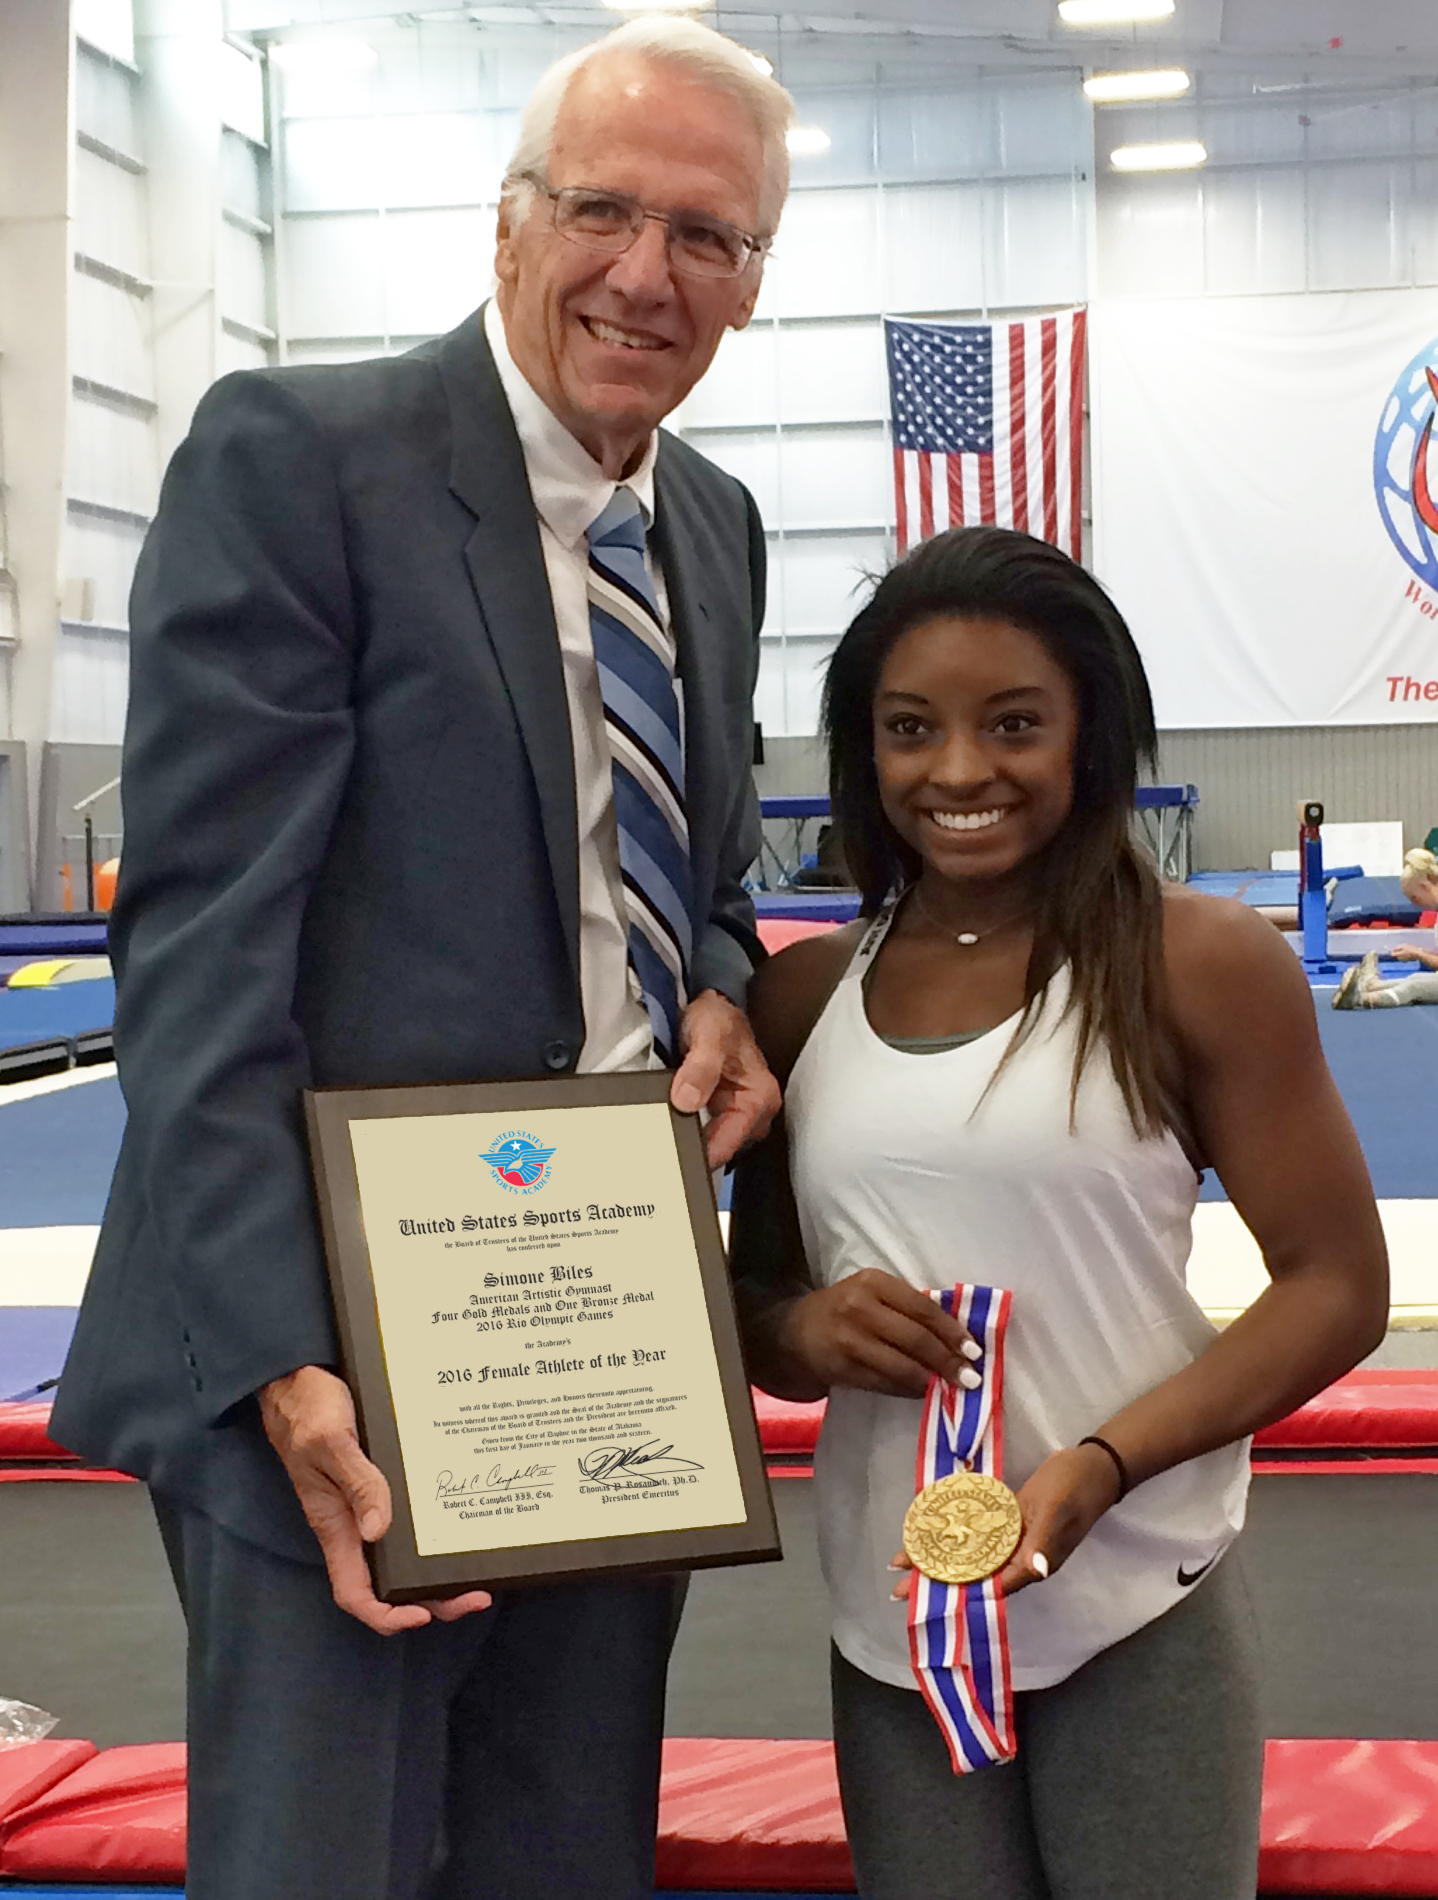 Olympic Gymnast Simone Biles Earns Academy S 16 Female Athlete Of The Year Award United States Sports Academy